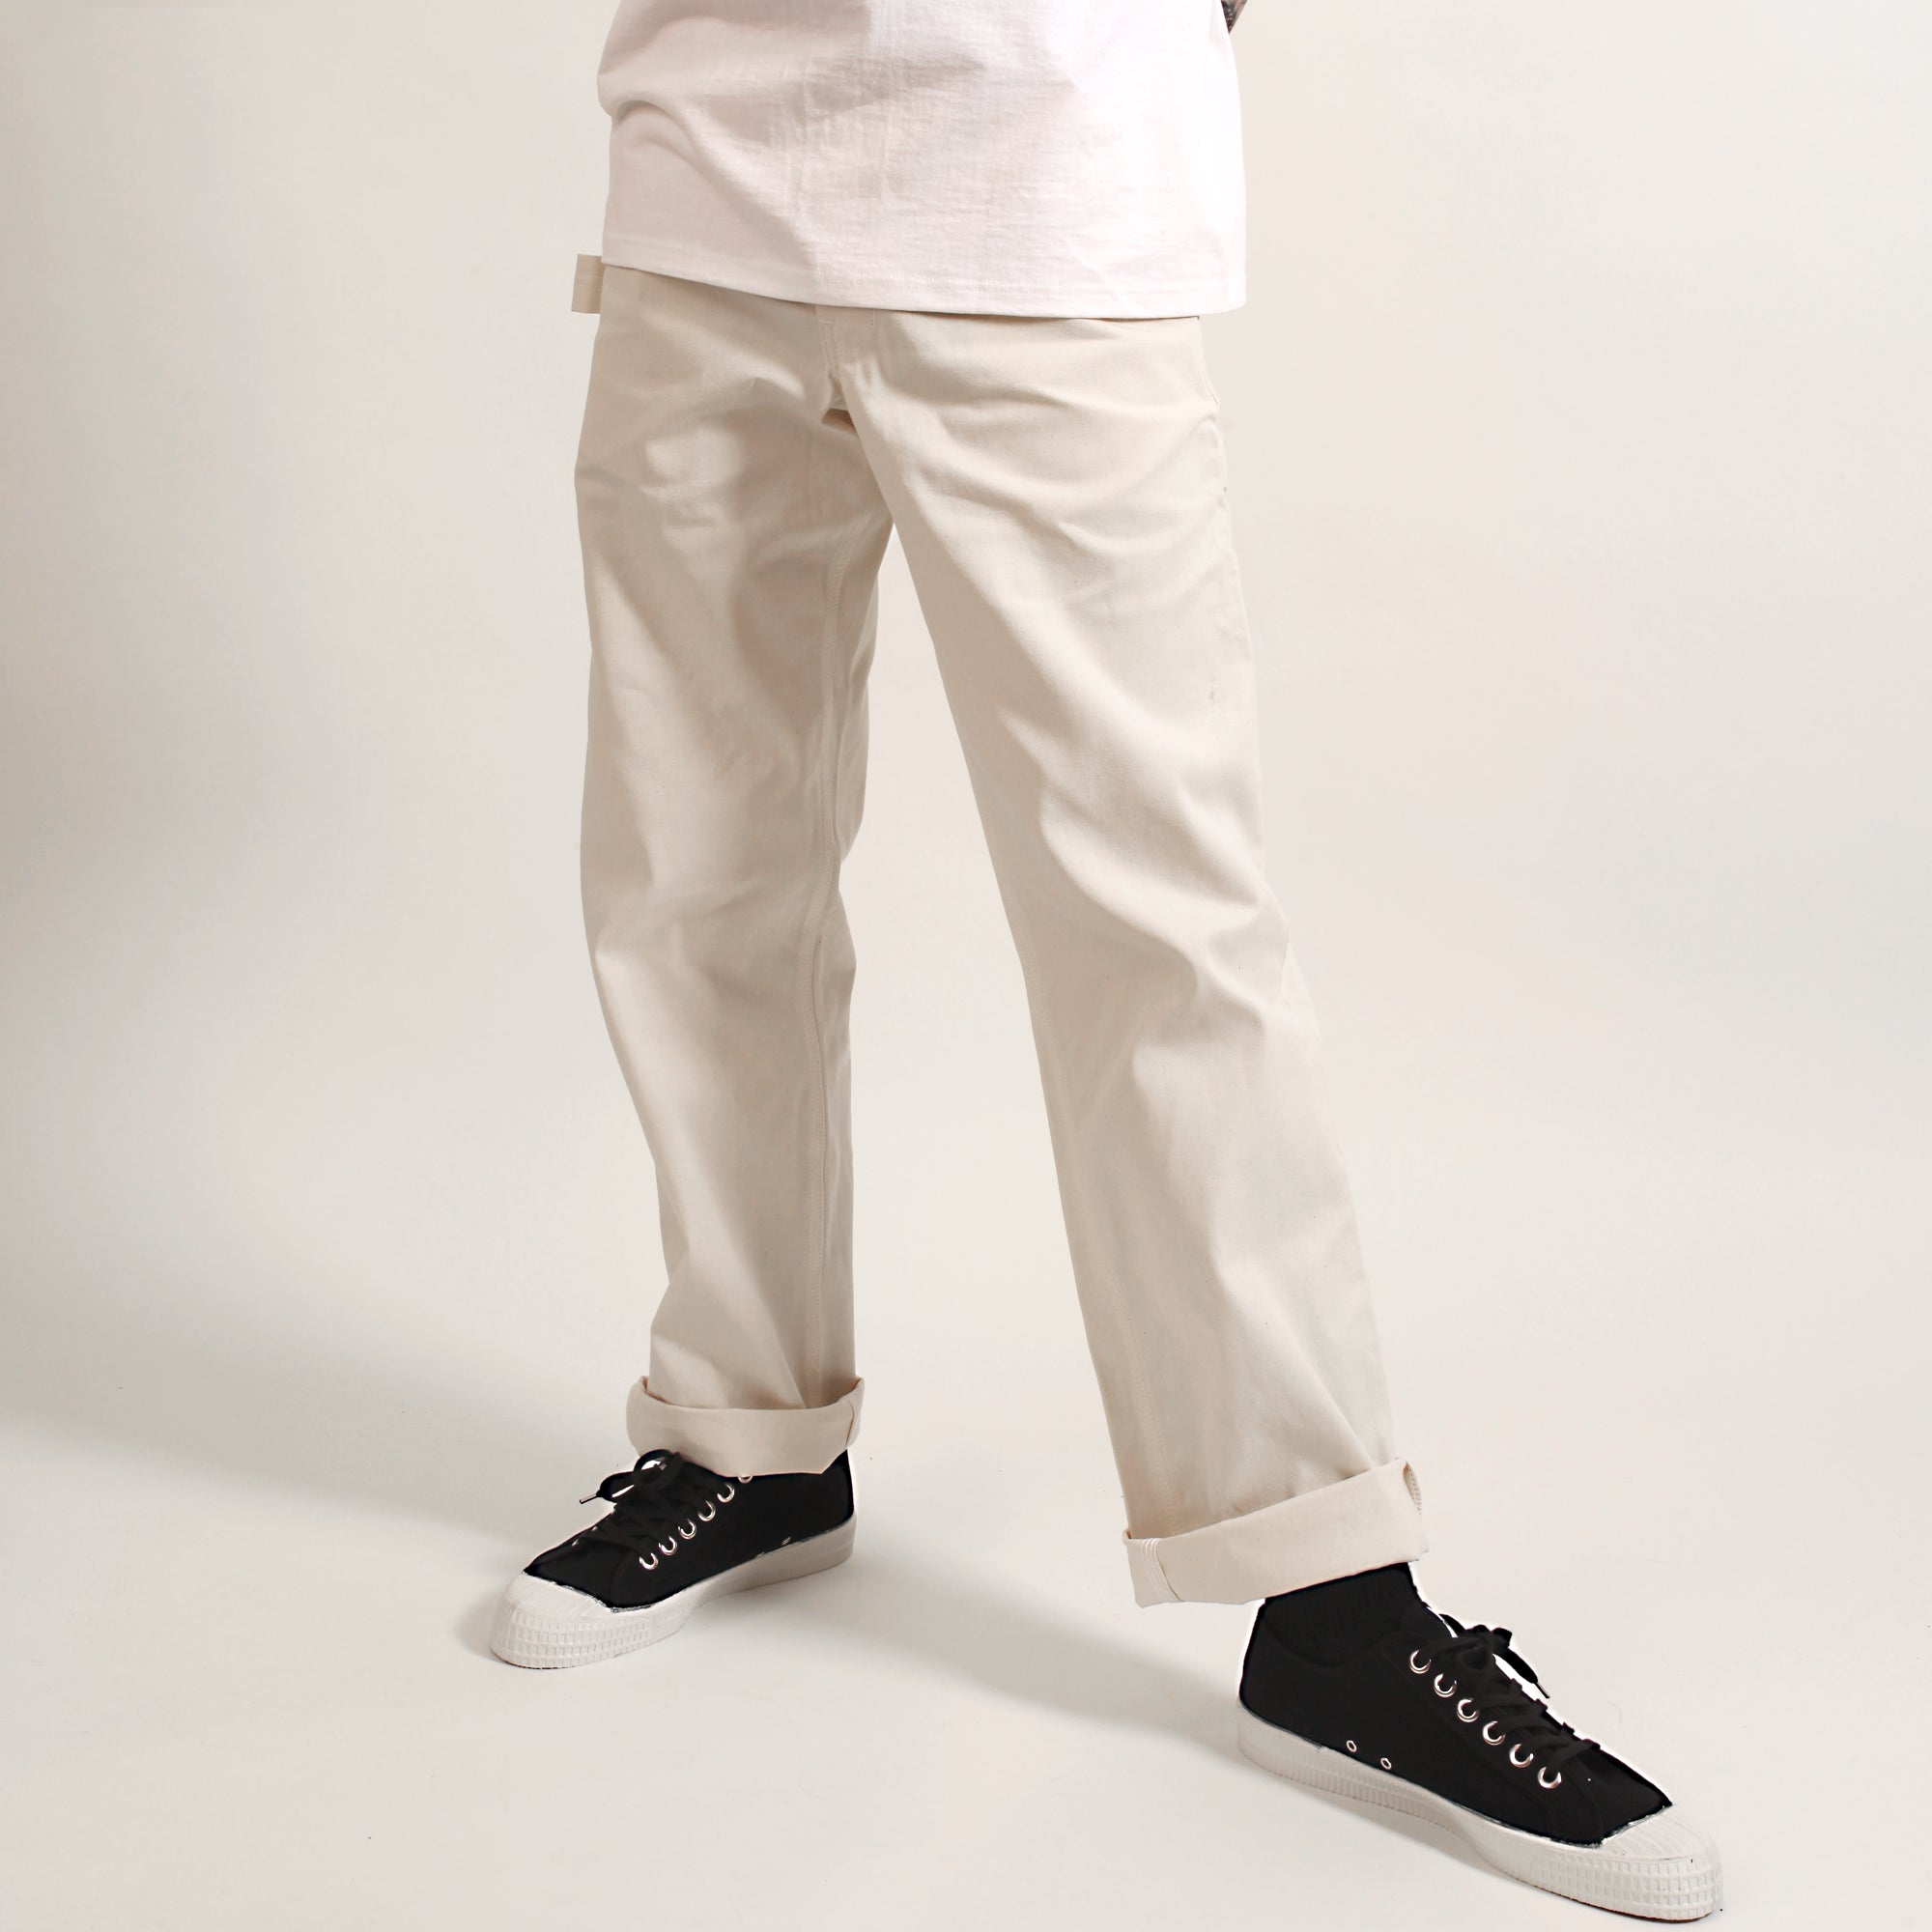 Ace Drop Cloth Tradesman Carpenter Pants - White